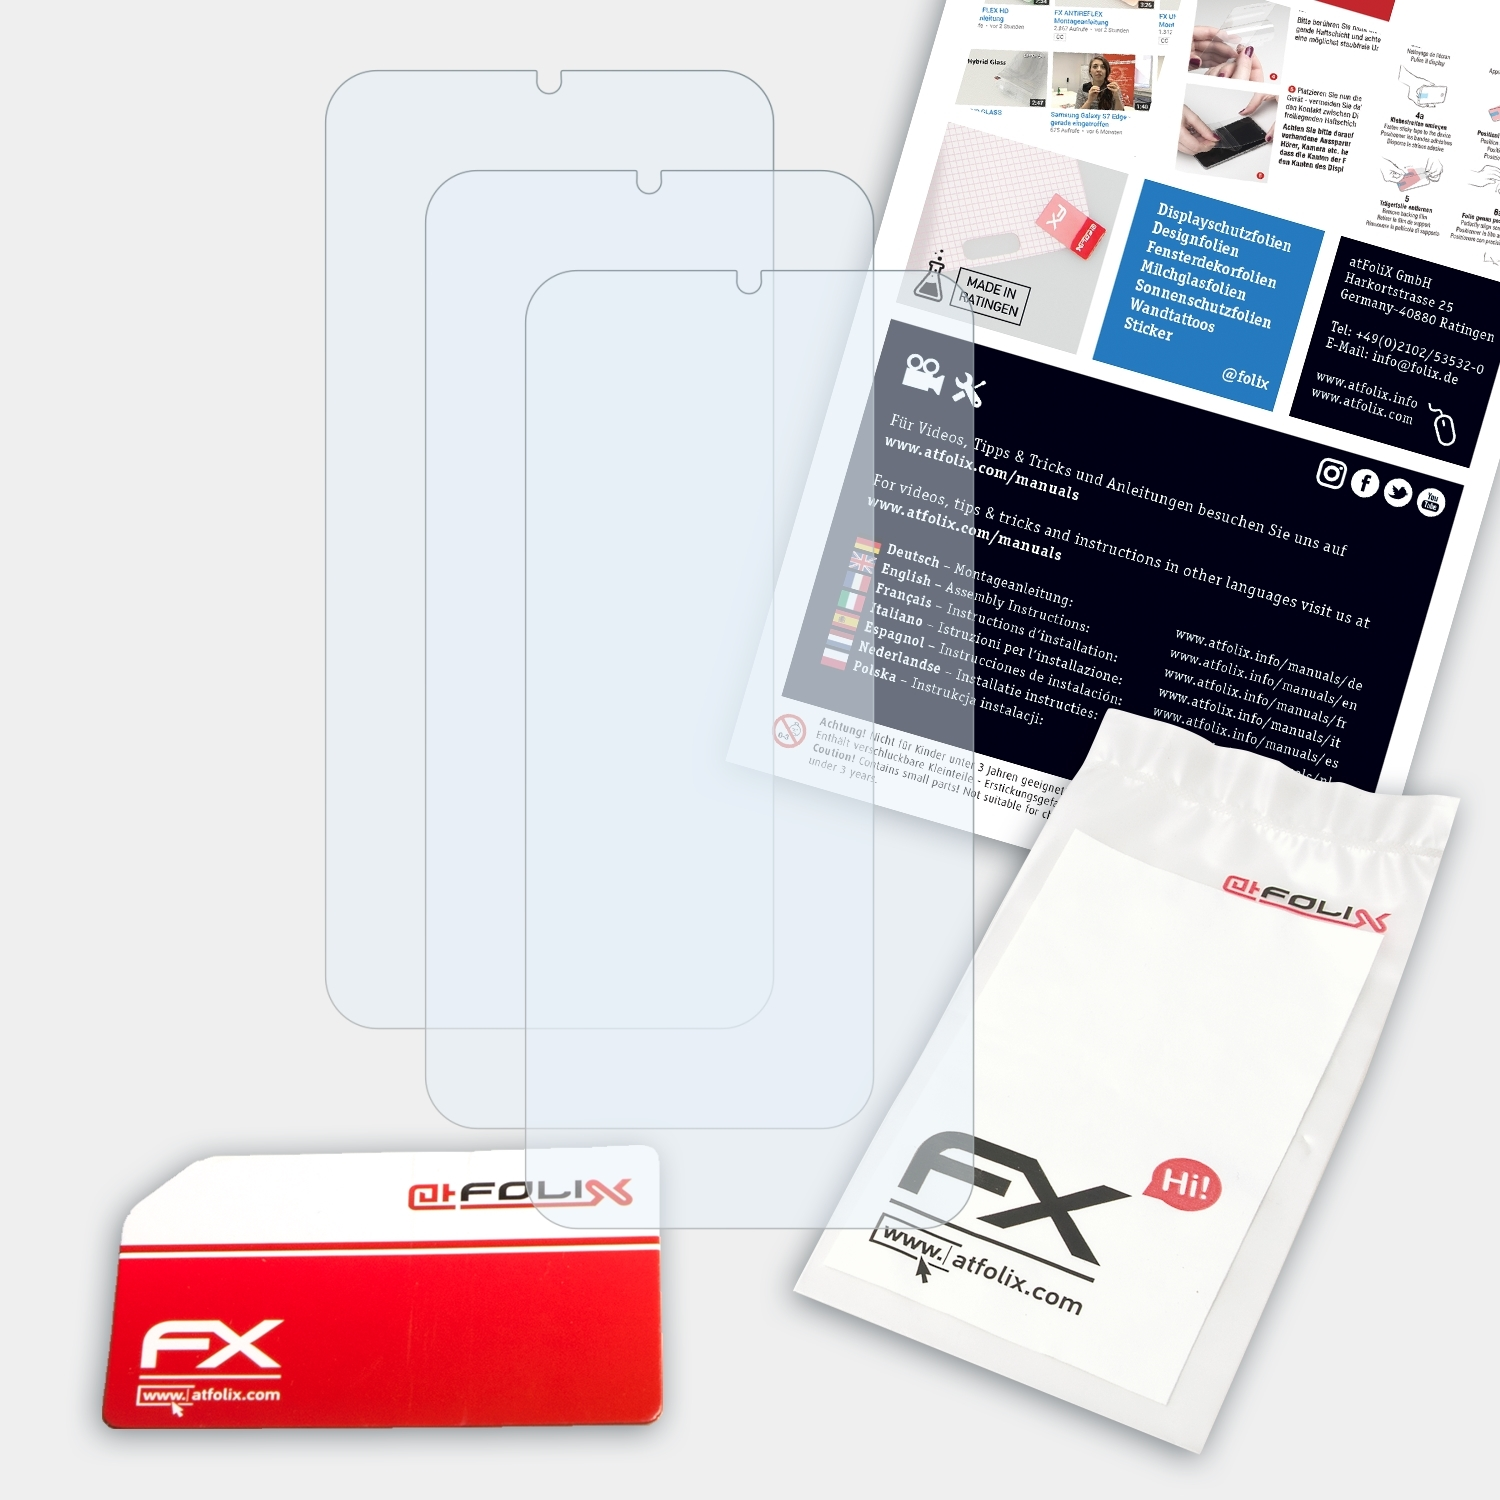 X10 ATFOLIX Max) Honor FX-Clear 3x Displayschutz(für